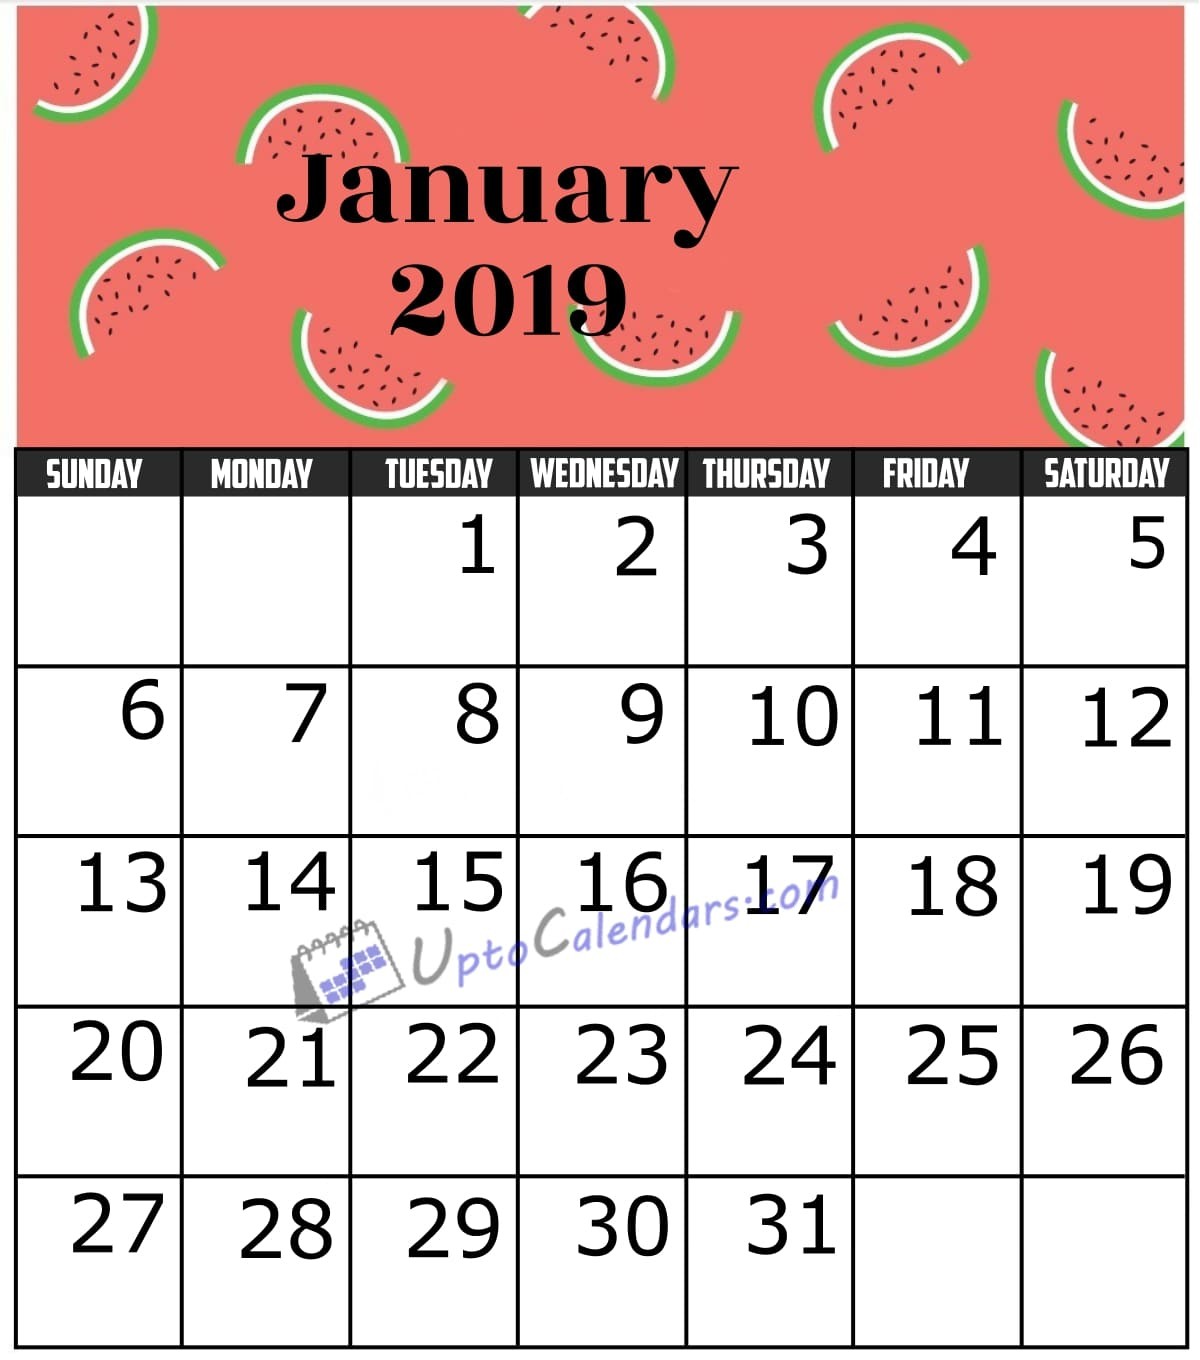 January 2019 Calendar Printable Template with Holidays PDF